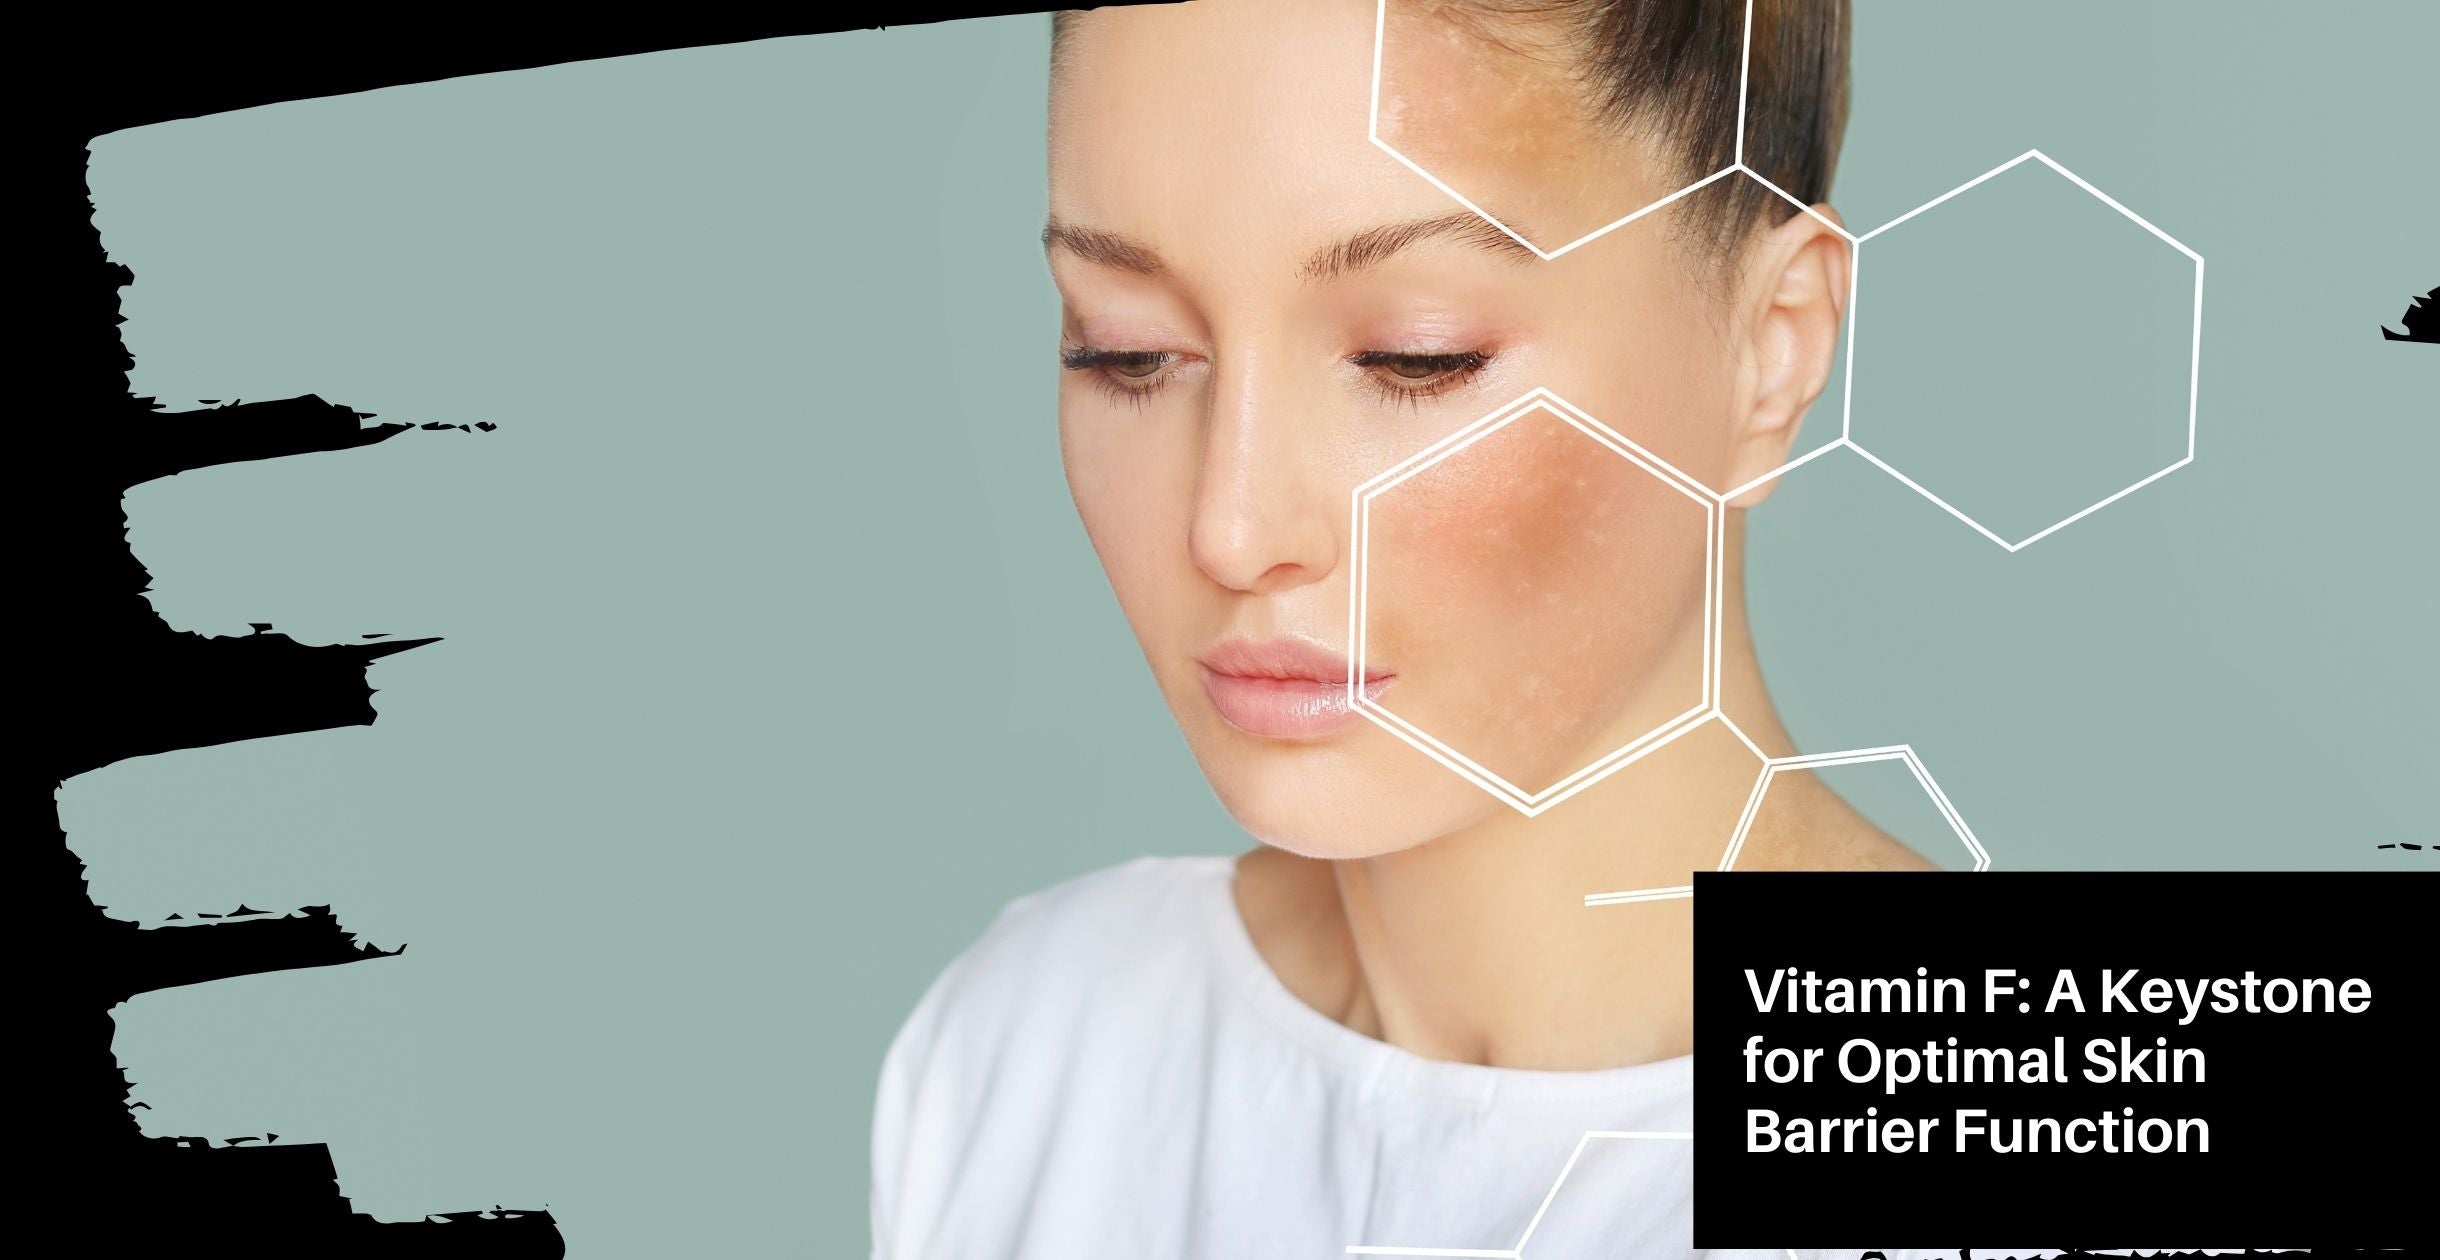 Vitamin F: A Keystone for Optimal Skin Barrier Function